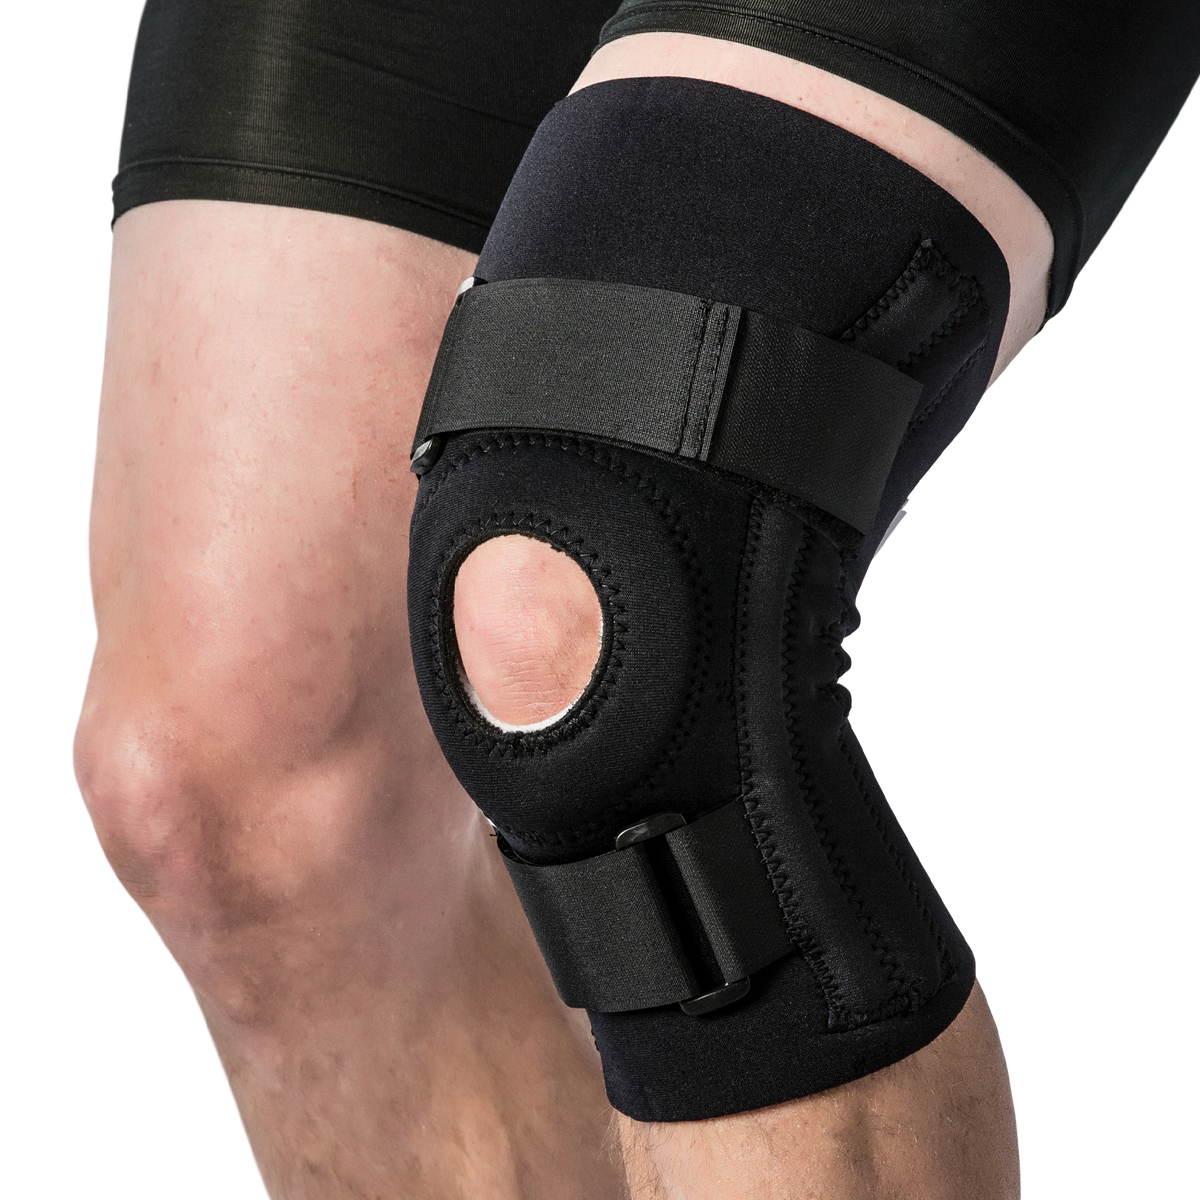 Jordan Padded Knee Sleeve Size M/S, Health & Nutrition, Braces